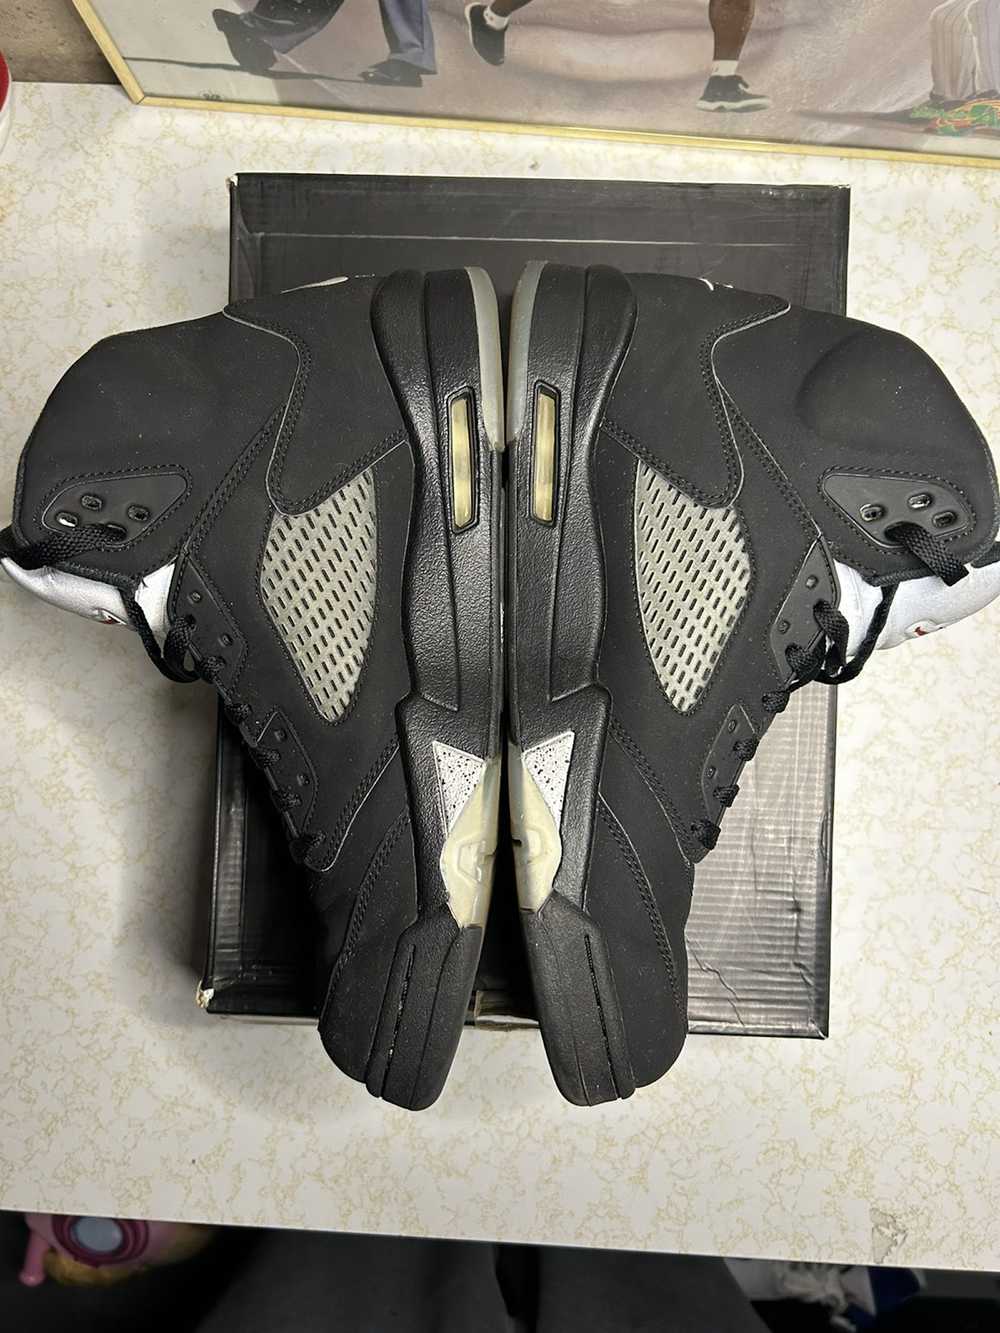 Jordan Brand Jordan Retro 5 “black metallic” - image 2